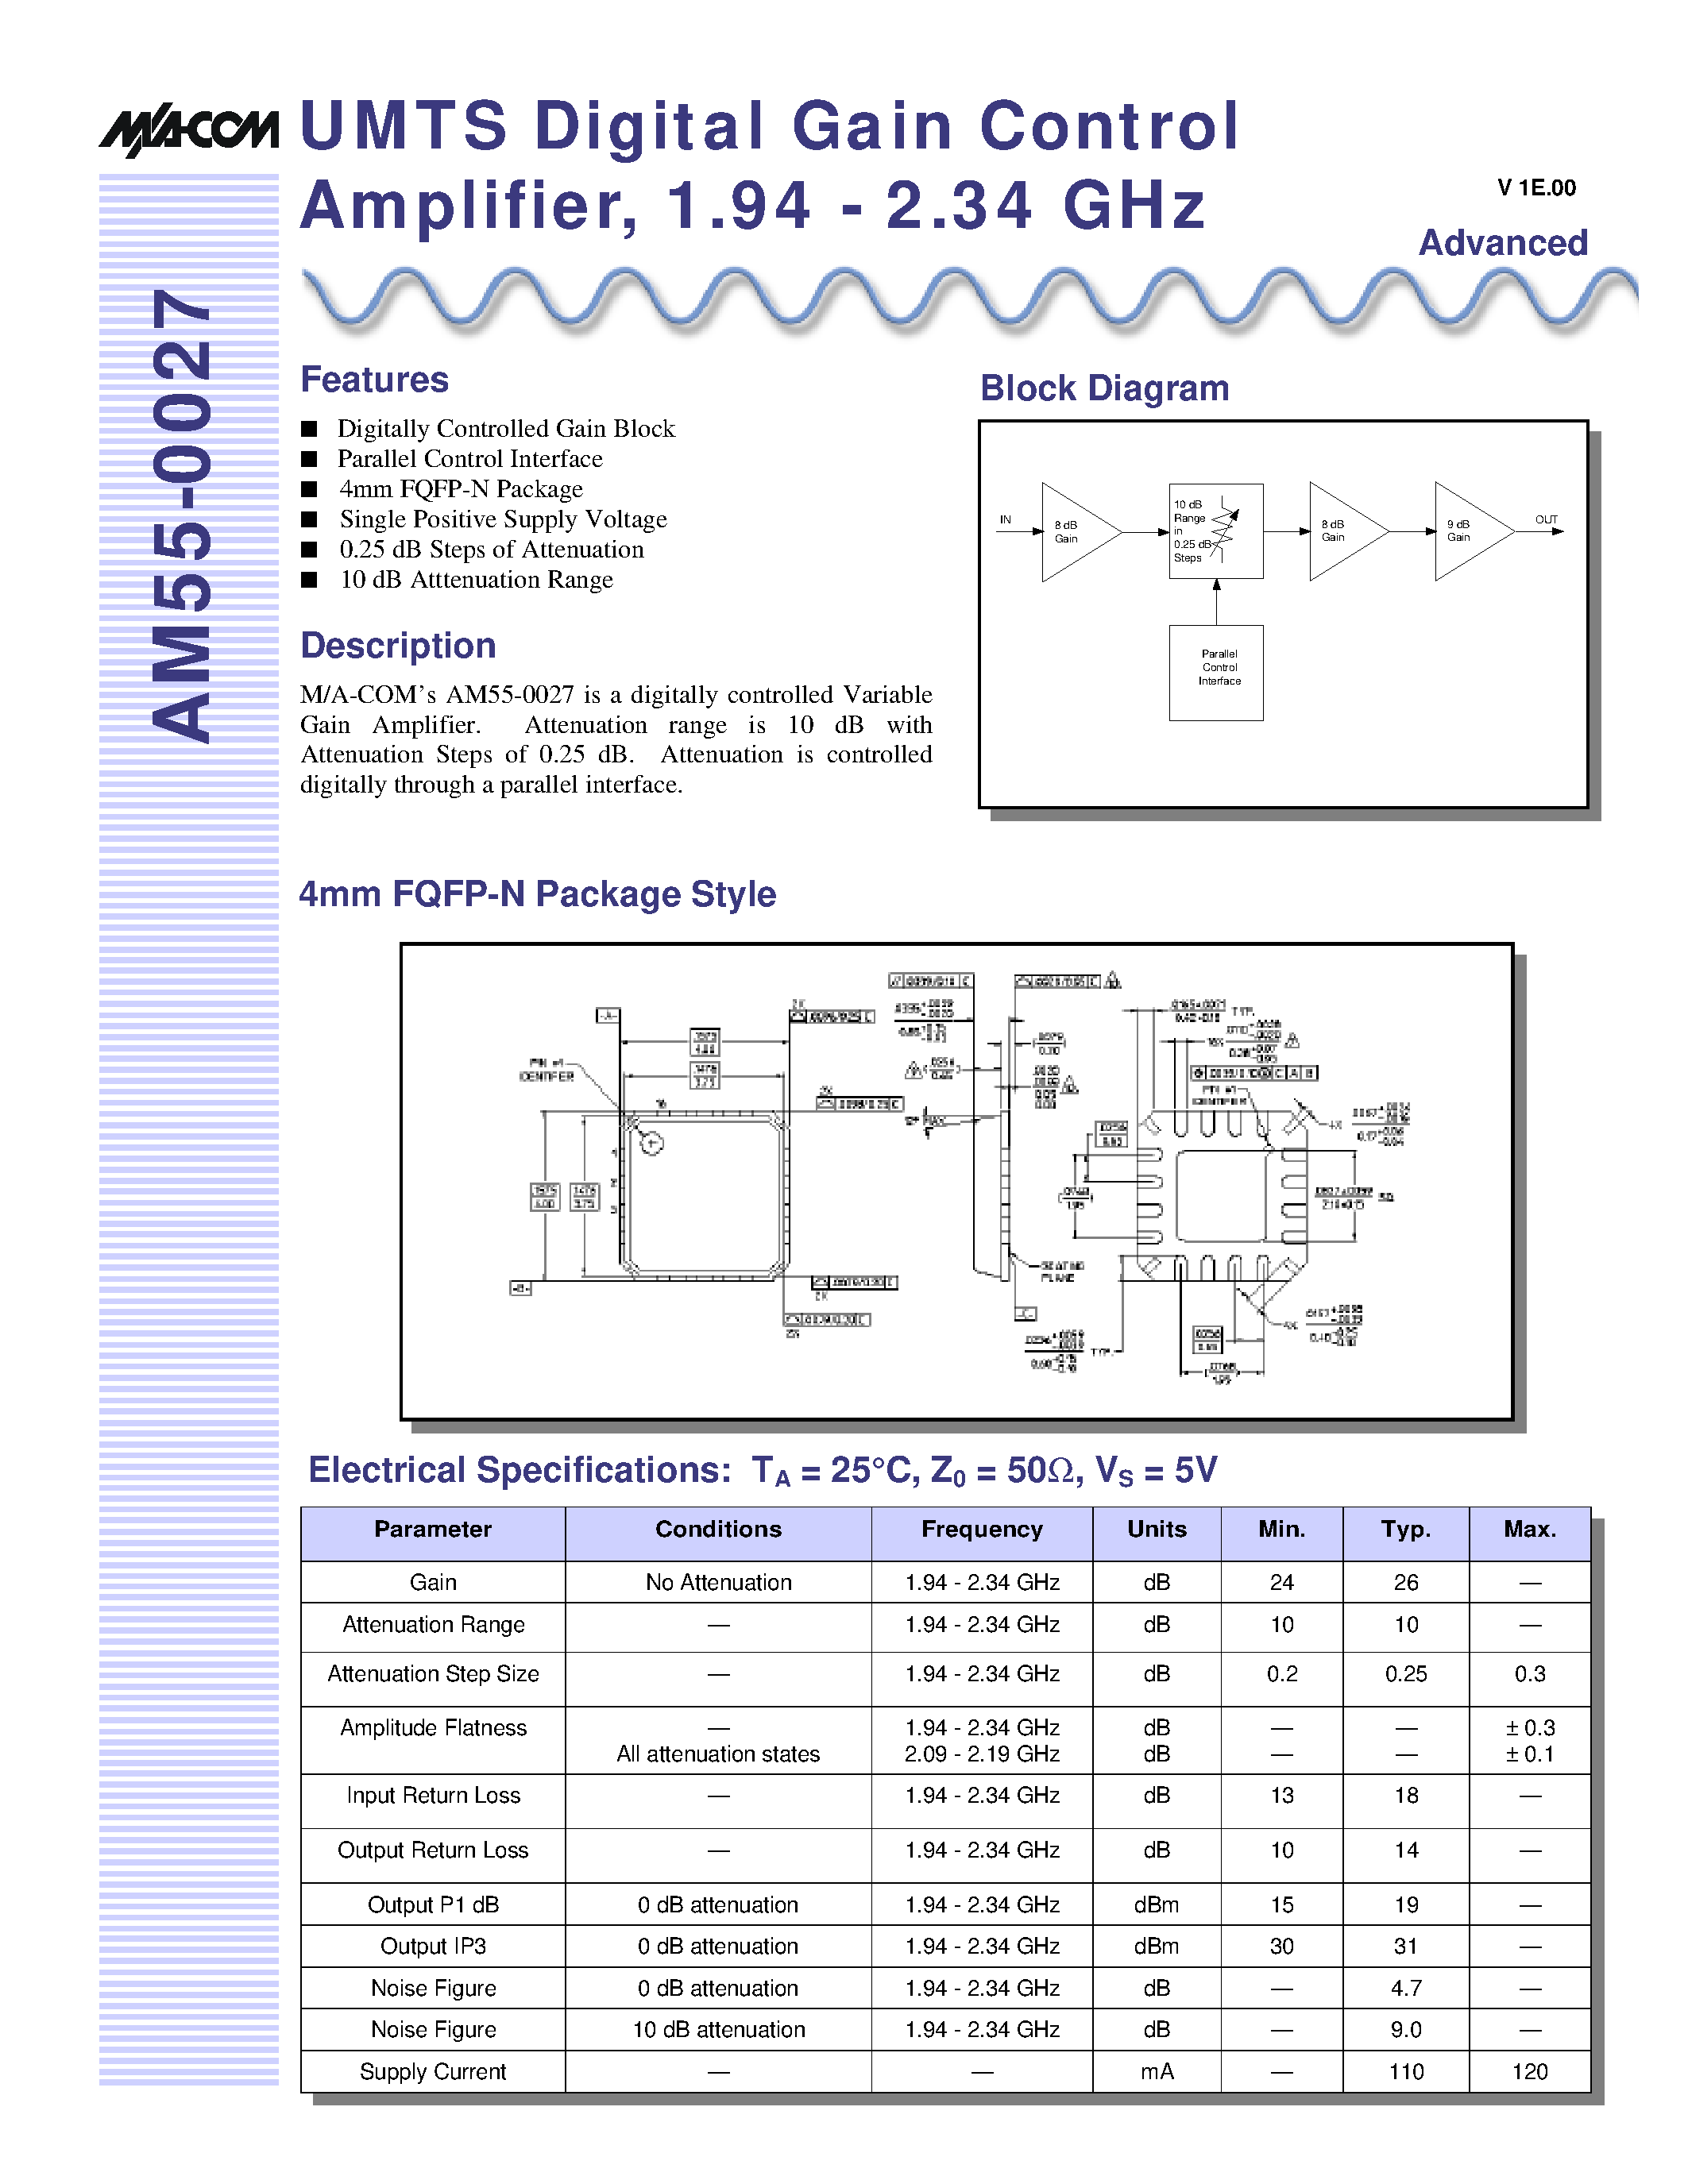 Datasheet AM55-0027 - UMTS Digital Gain Control Amplifier/ 1.94 - 2.34 GHz page 1